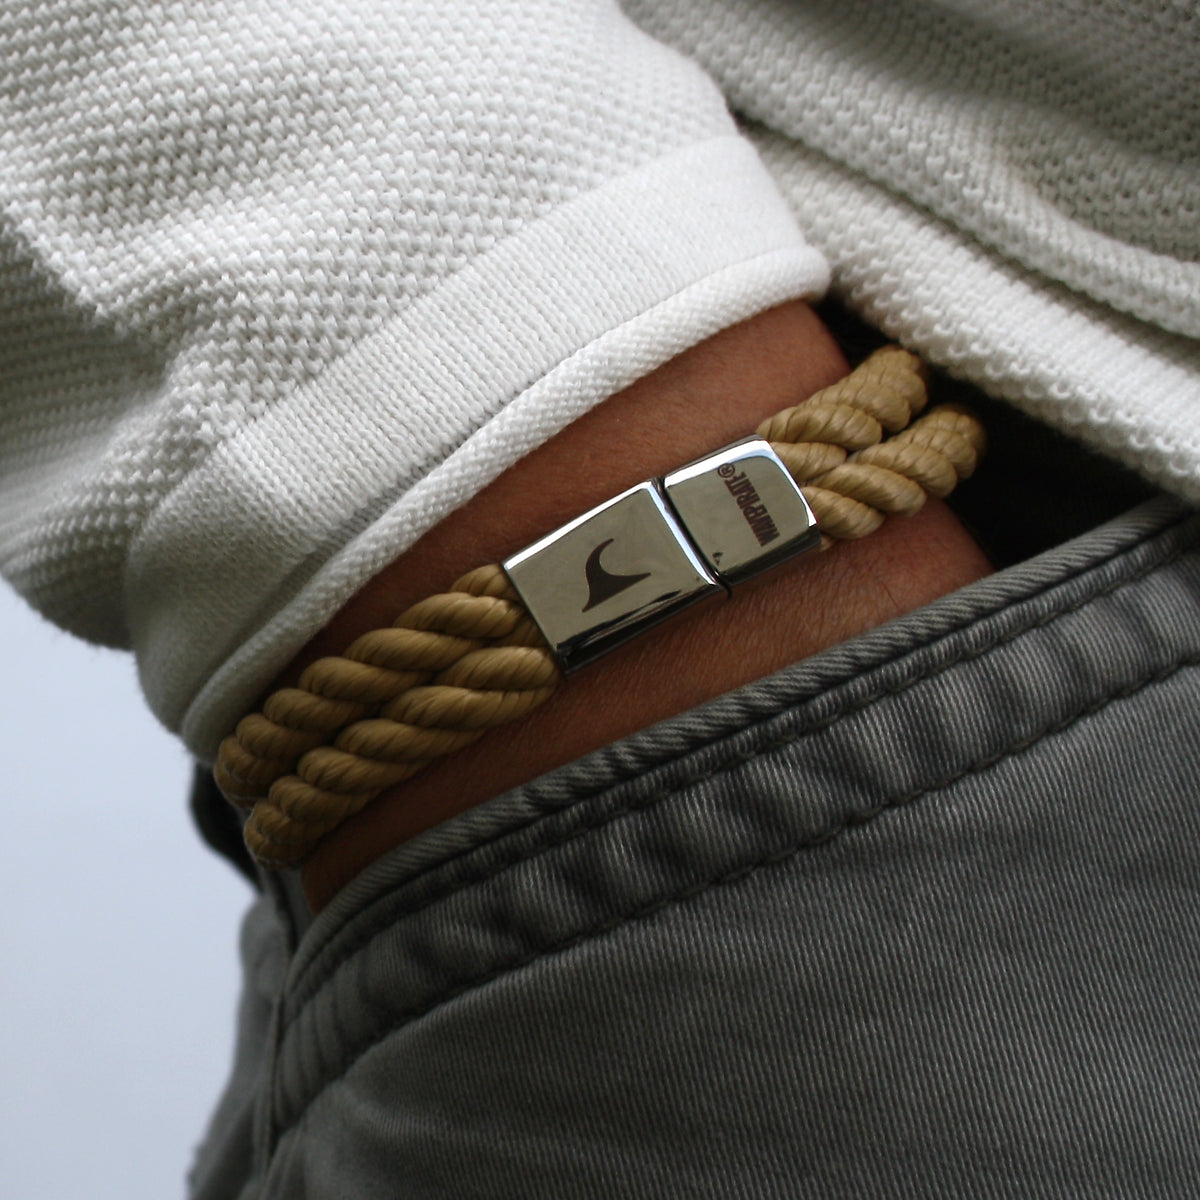 Herren-Segeltau-Armband-Tarifa-beige-geflochten-Kordel-Edelstahlverschluss-getragen-wavepirate-shop-k